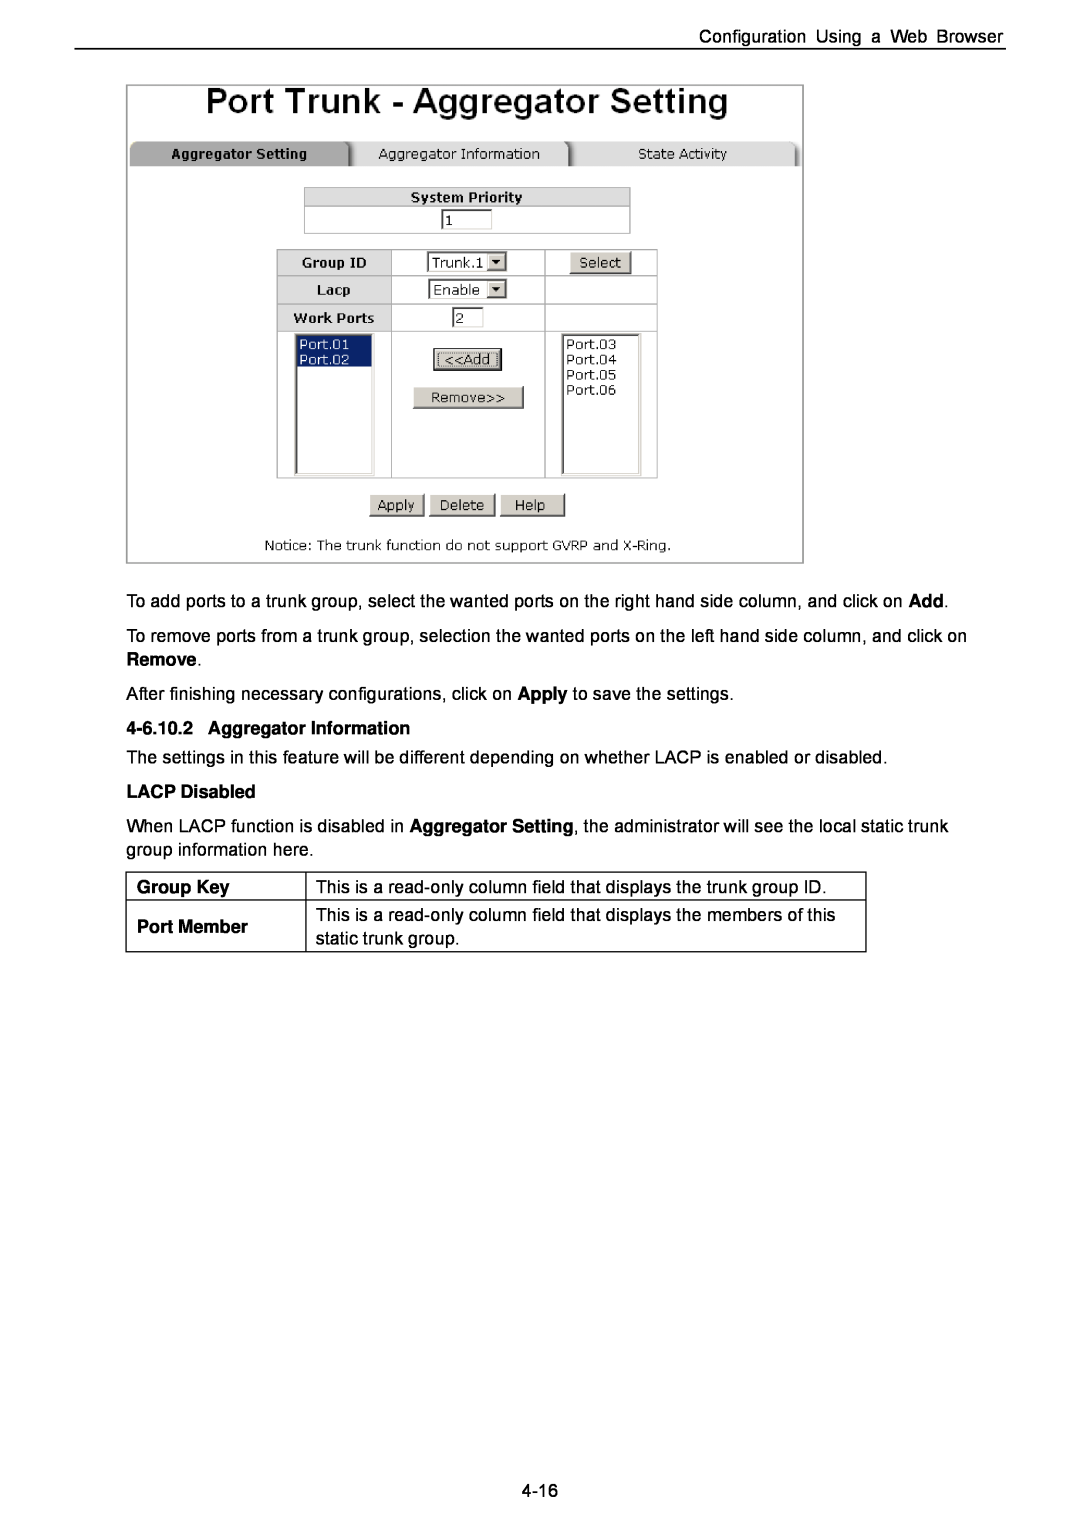 Husky HME-421E, HME-423E user manual Aggregator Information, LACP Disabled, Group Key, Port Member 